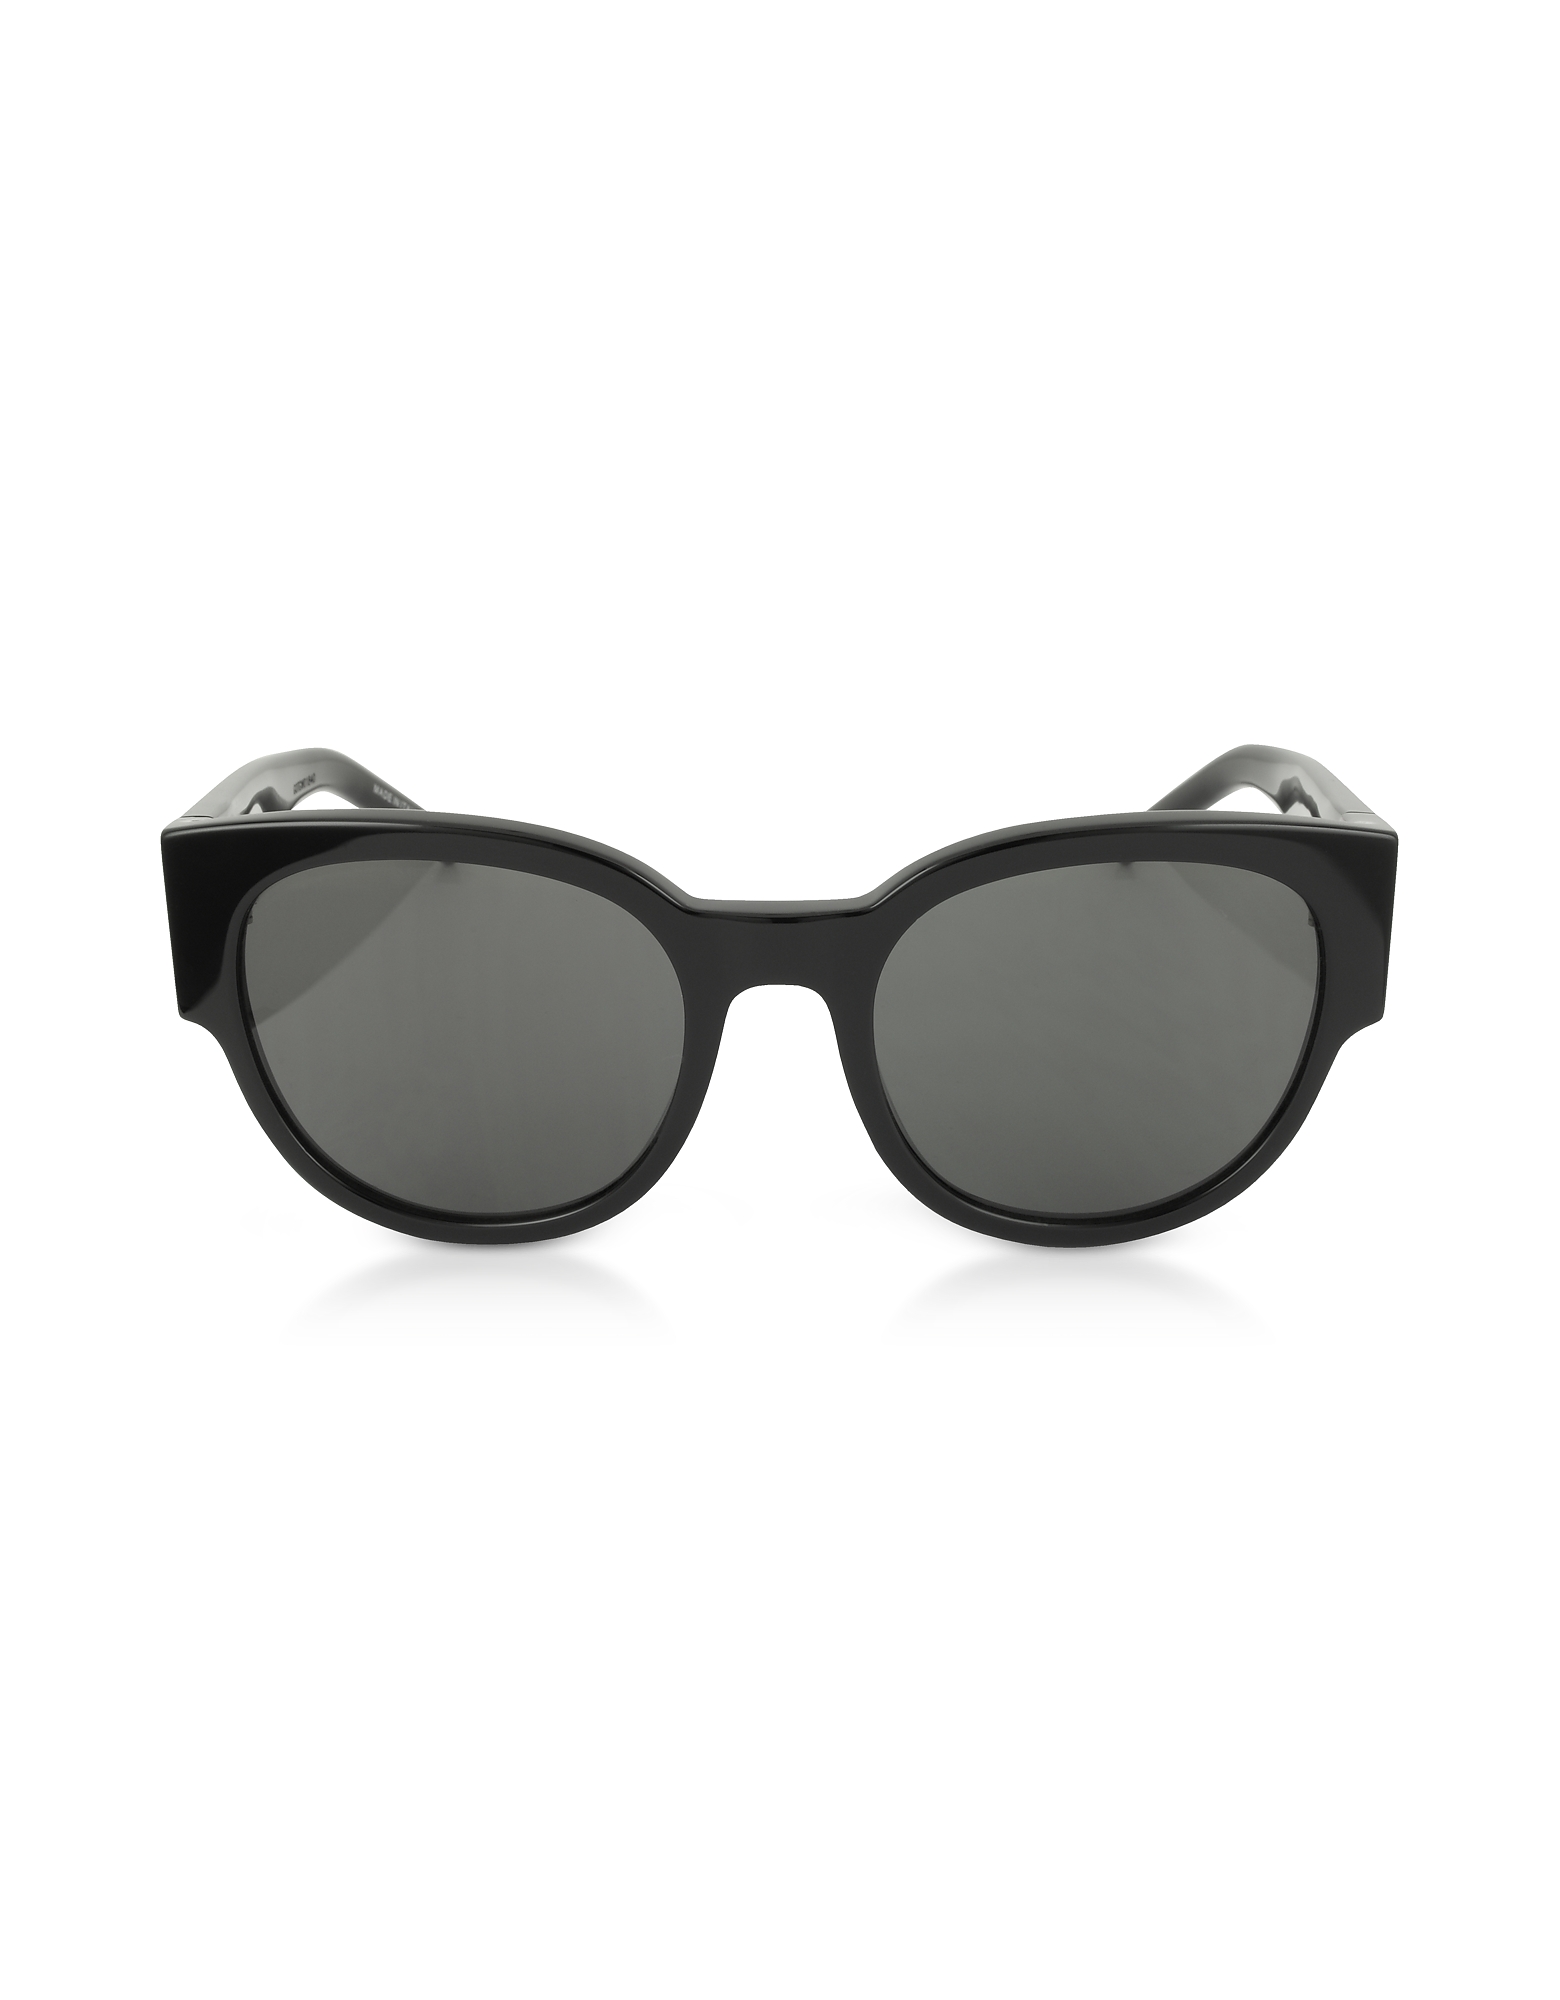 

SL M19 Acetate Oval Frame Women's Sunglasses, Black/gray